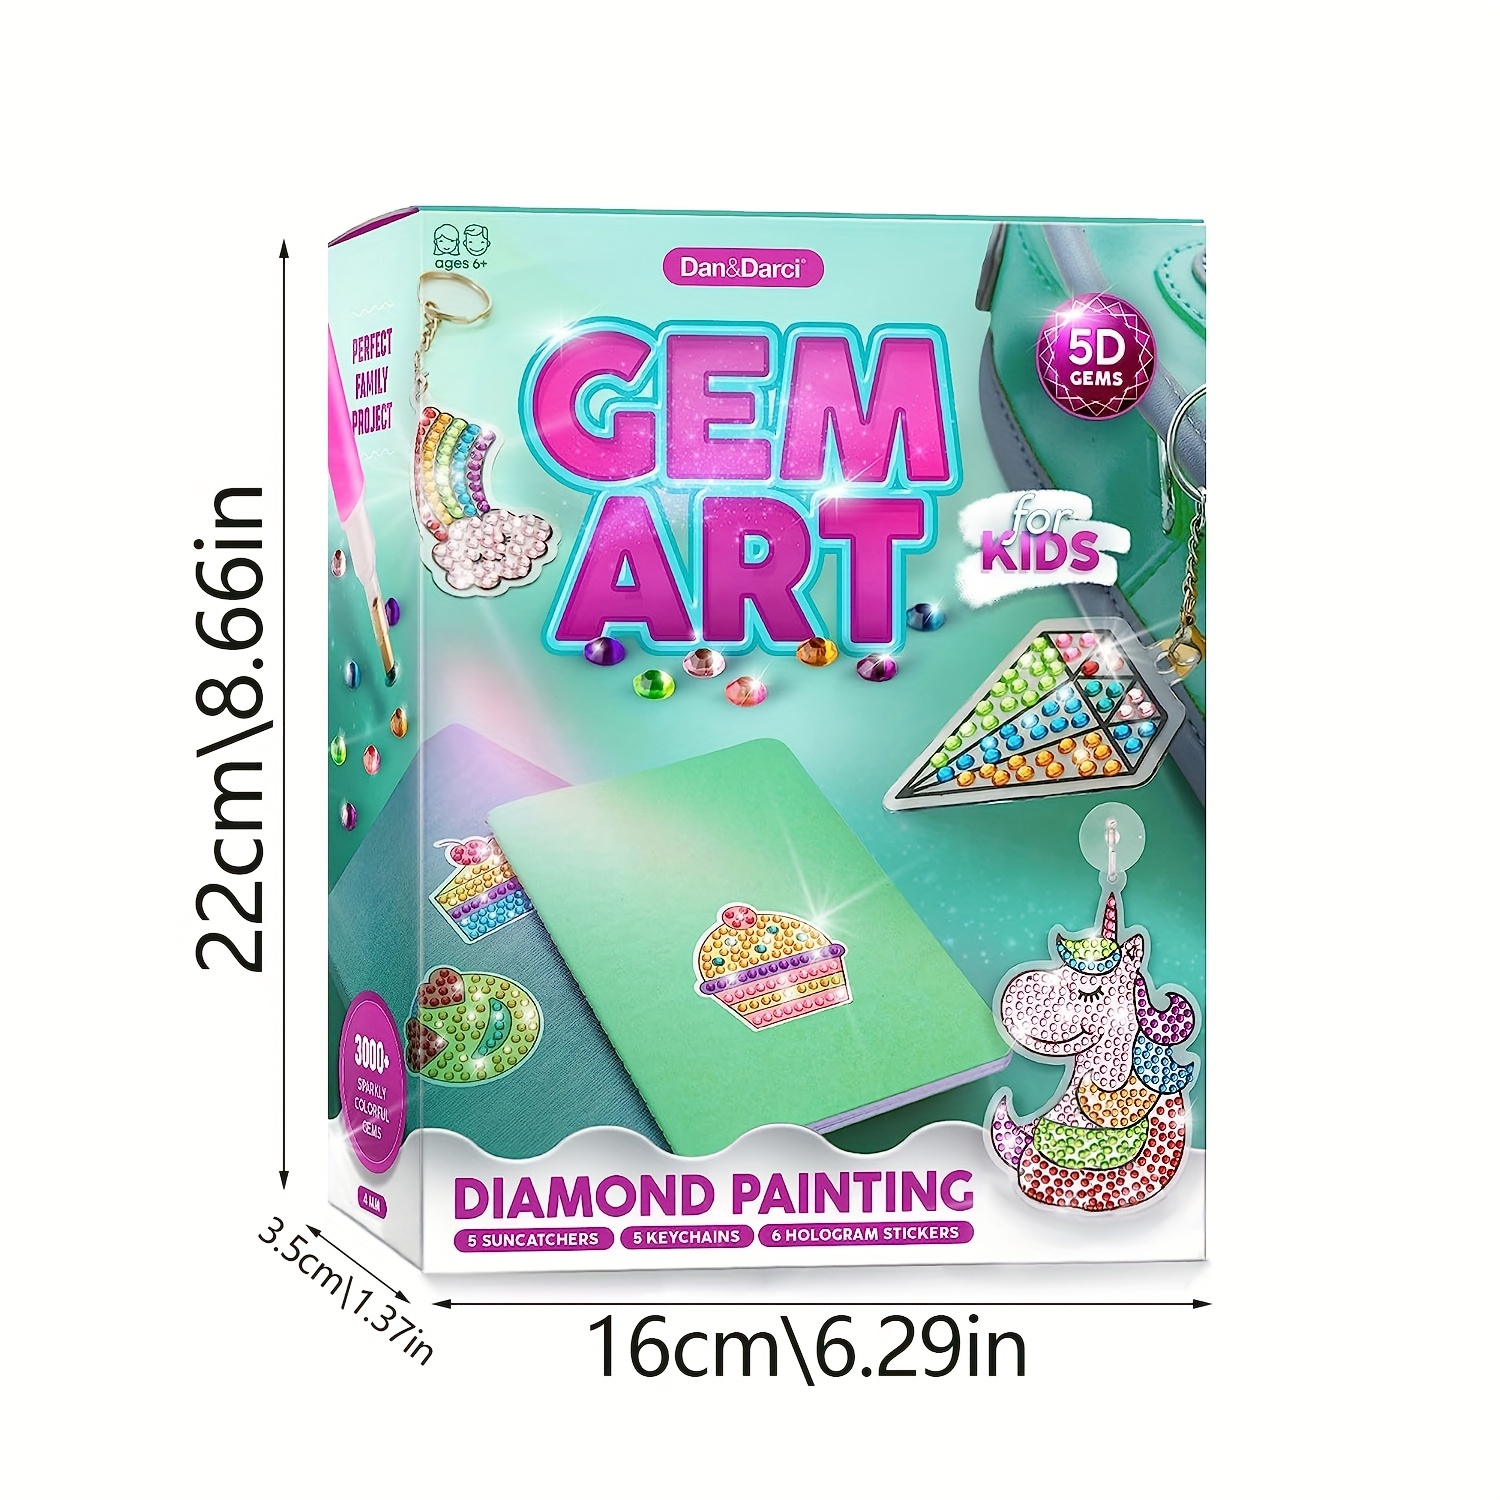 Dan&Darci Gem Art, Kids Diamond Painting Kit for Kids - Big 5D Gems - Arts & Crafts - Girls and Boys Ages 6-12 - Gem Painting Kits - Best Tween Gift